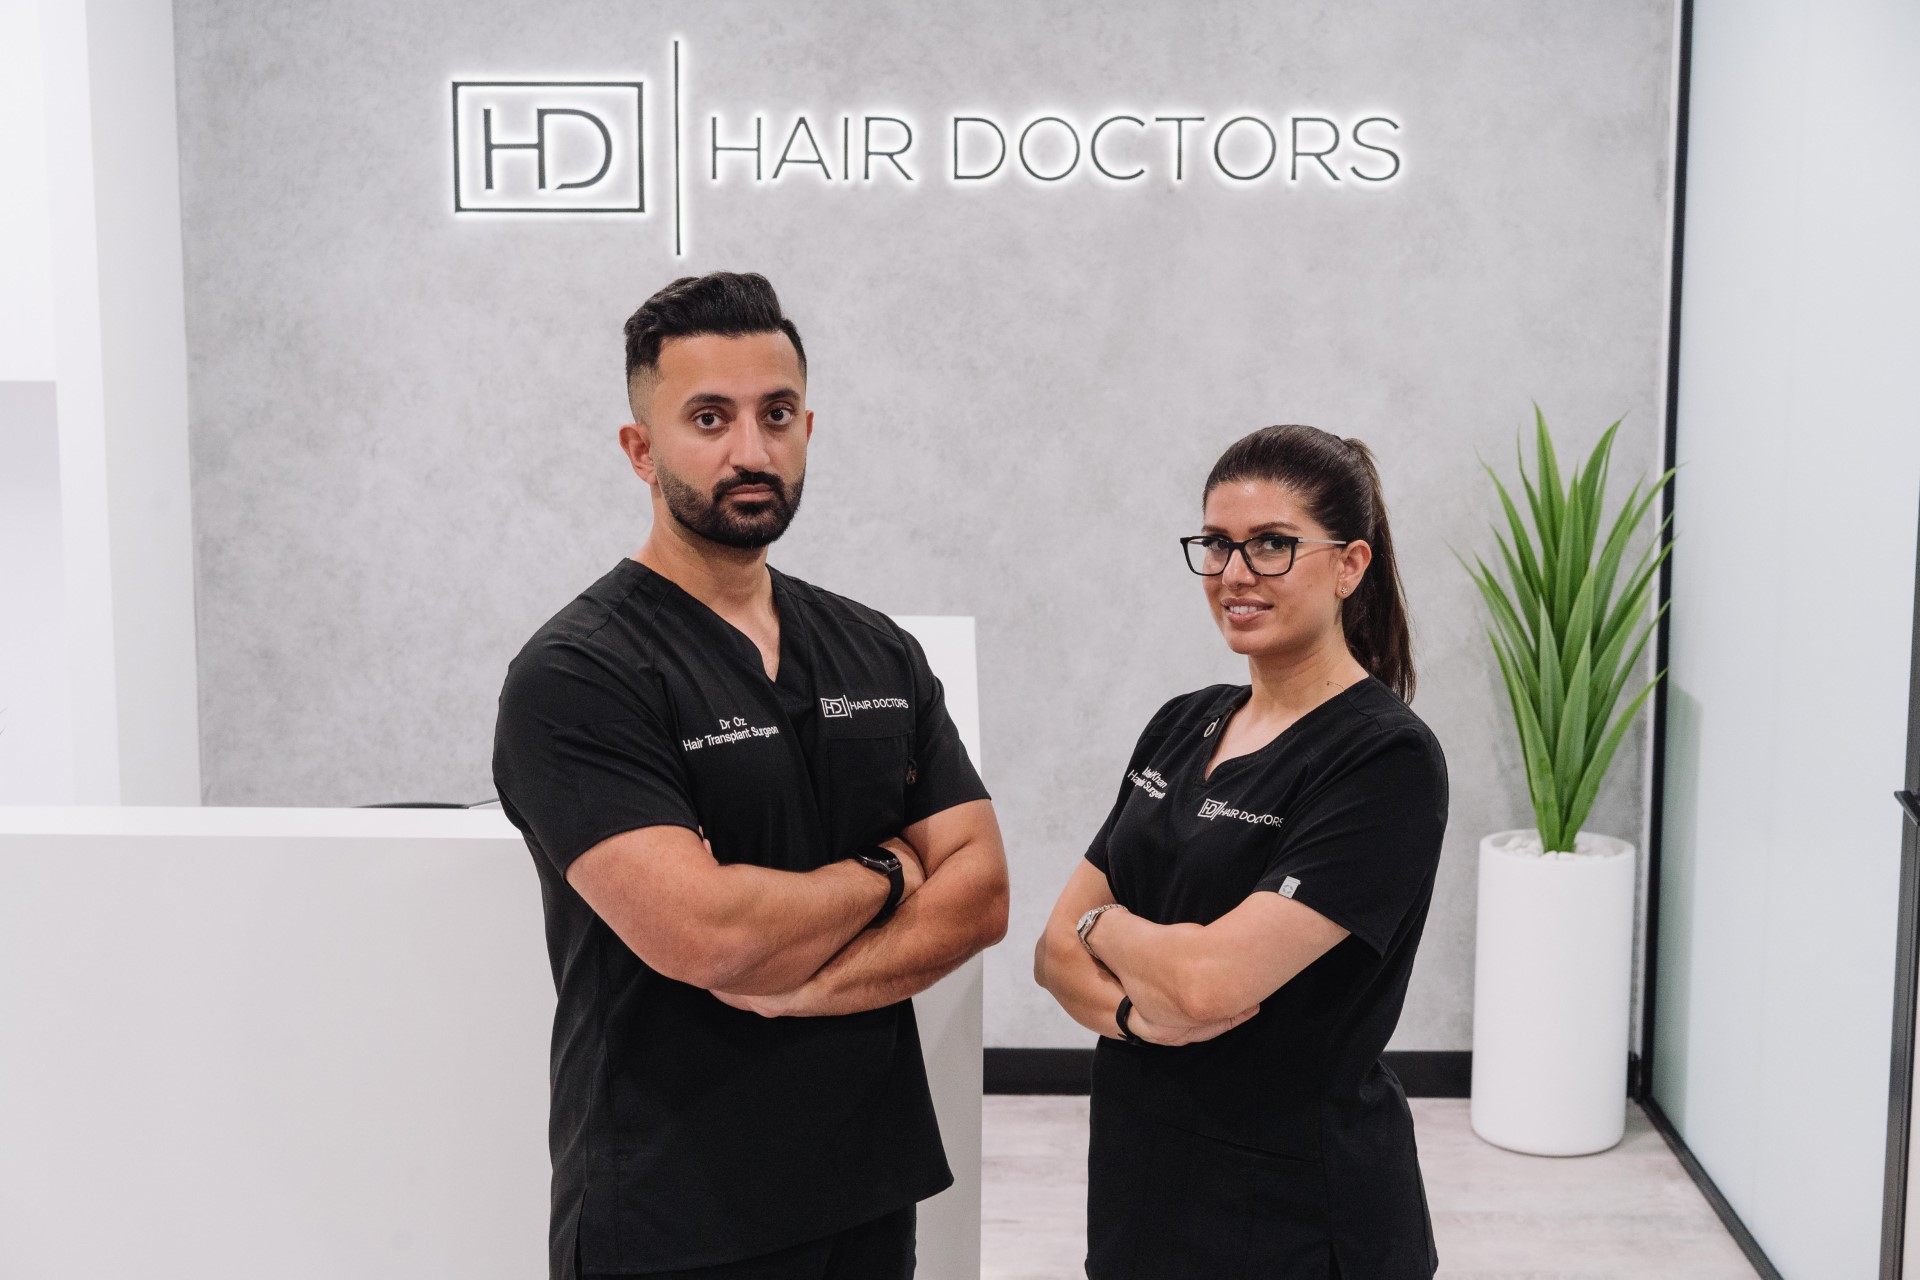 The No 1 Hair Clinic Sydney - Hair Doctors